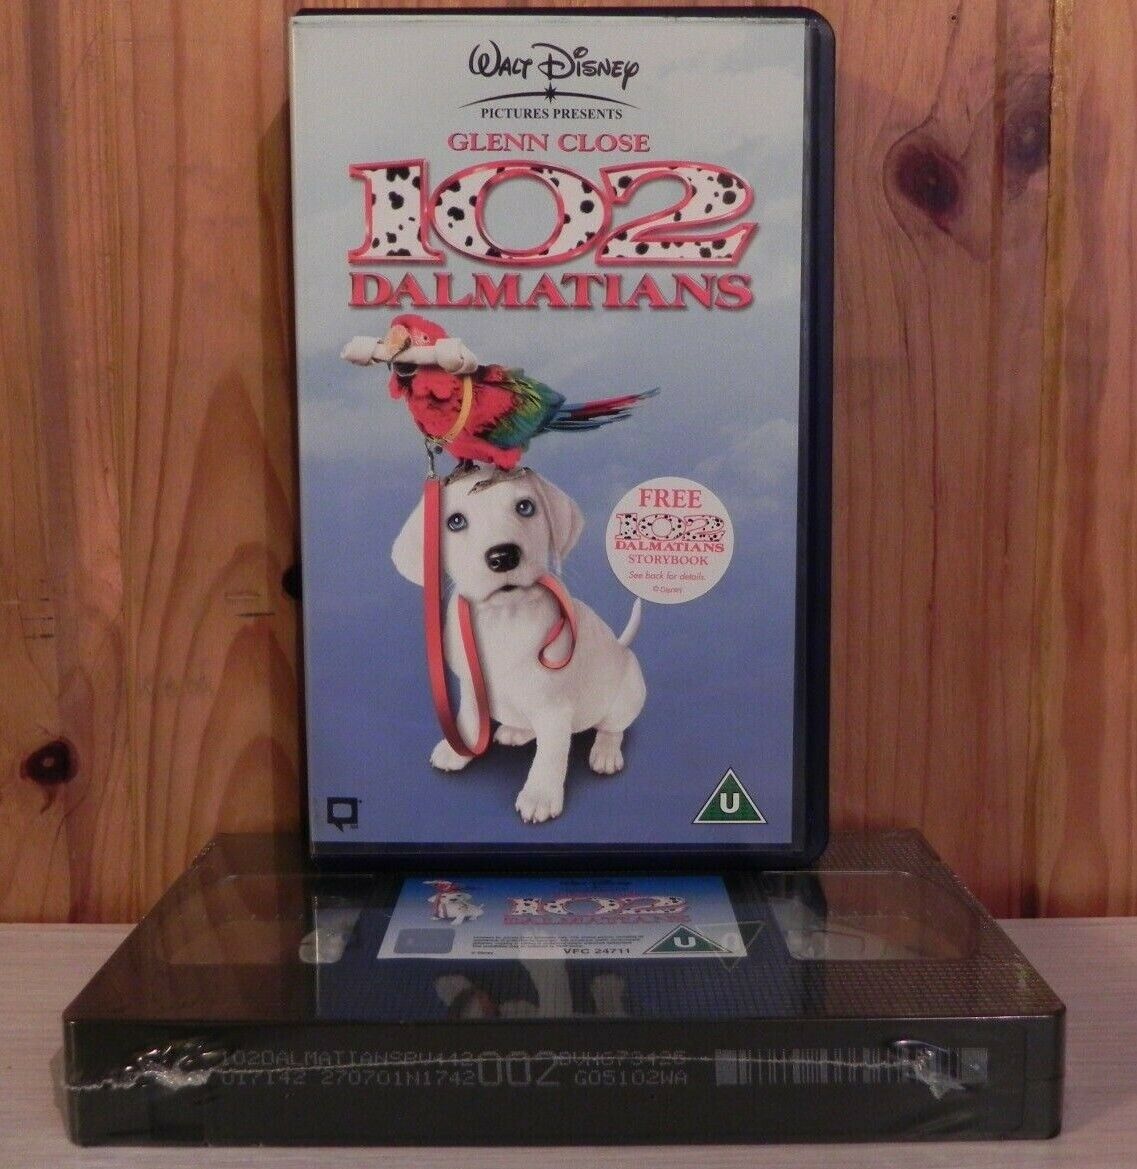 102 Dalmatians: Walt Disney (2000) - Brand New Sealed - G.Close - Kids - VHS-